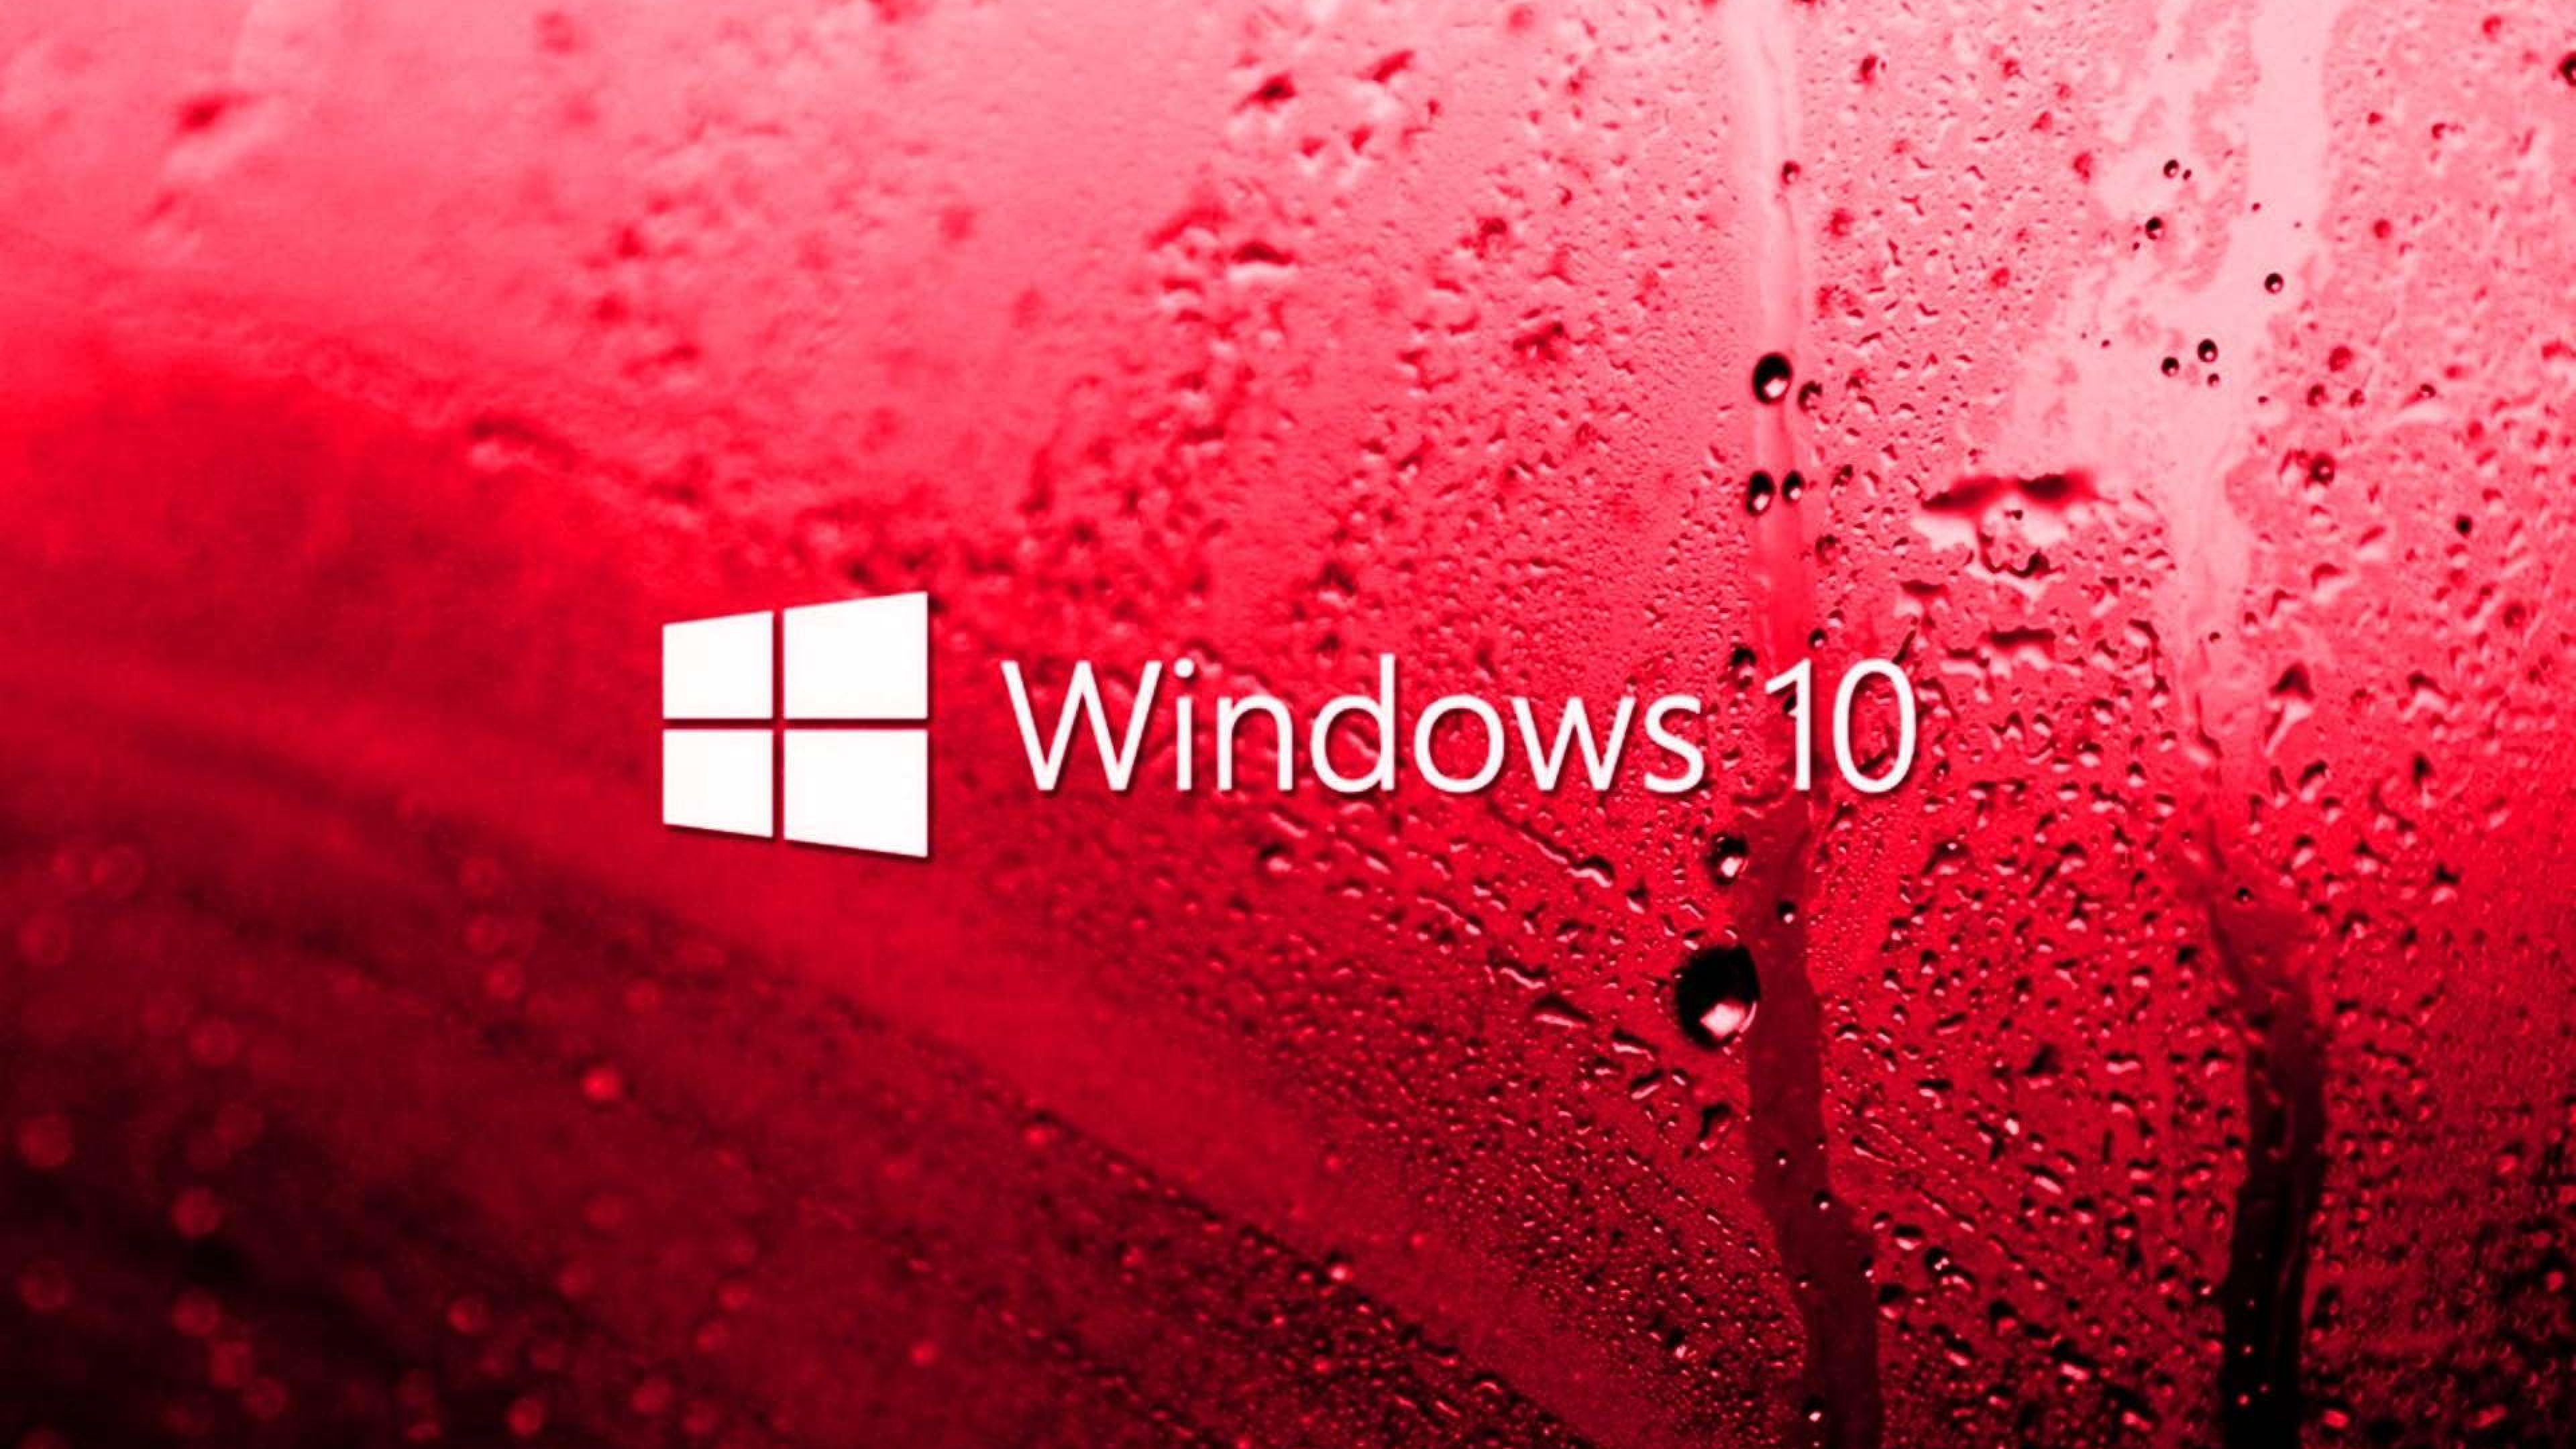 Windows 10 4k Wallpaper Download